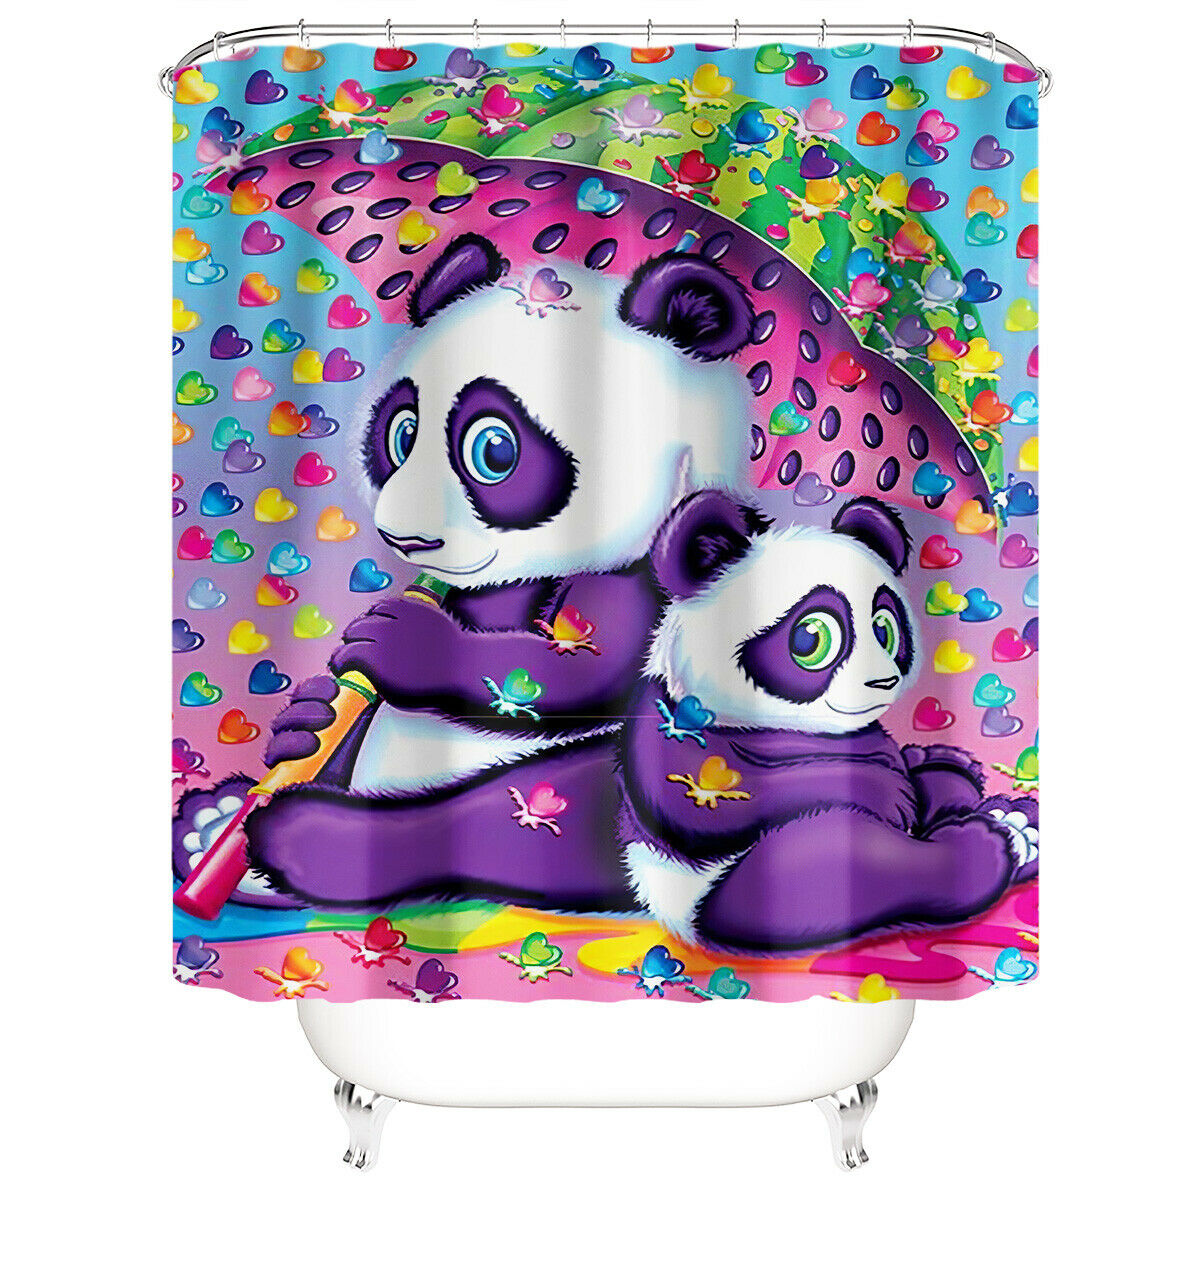 Panda Shower Curtain Bathroom Rug Set Thick Bath Mat Non-Slip Toilet Lid Cover--Free Shipping at meselling99